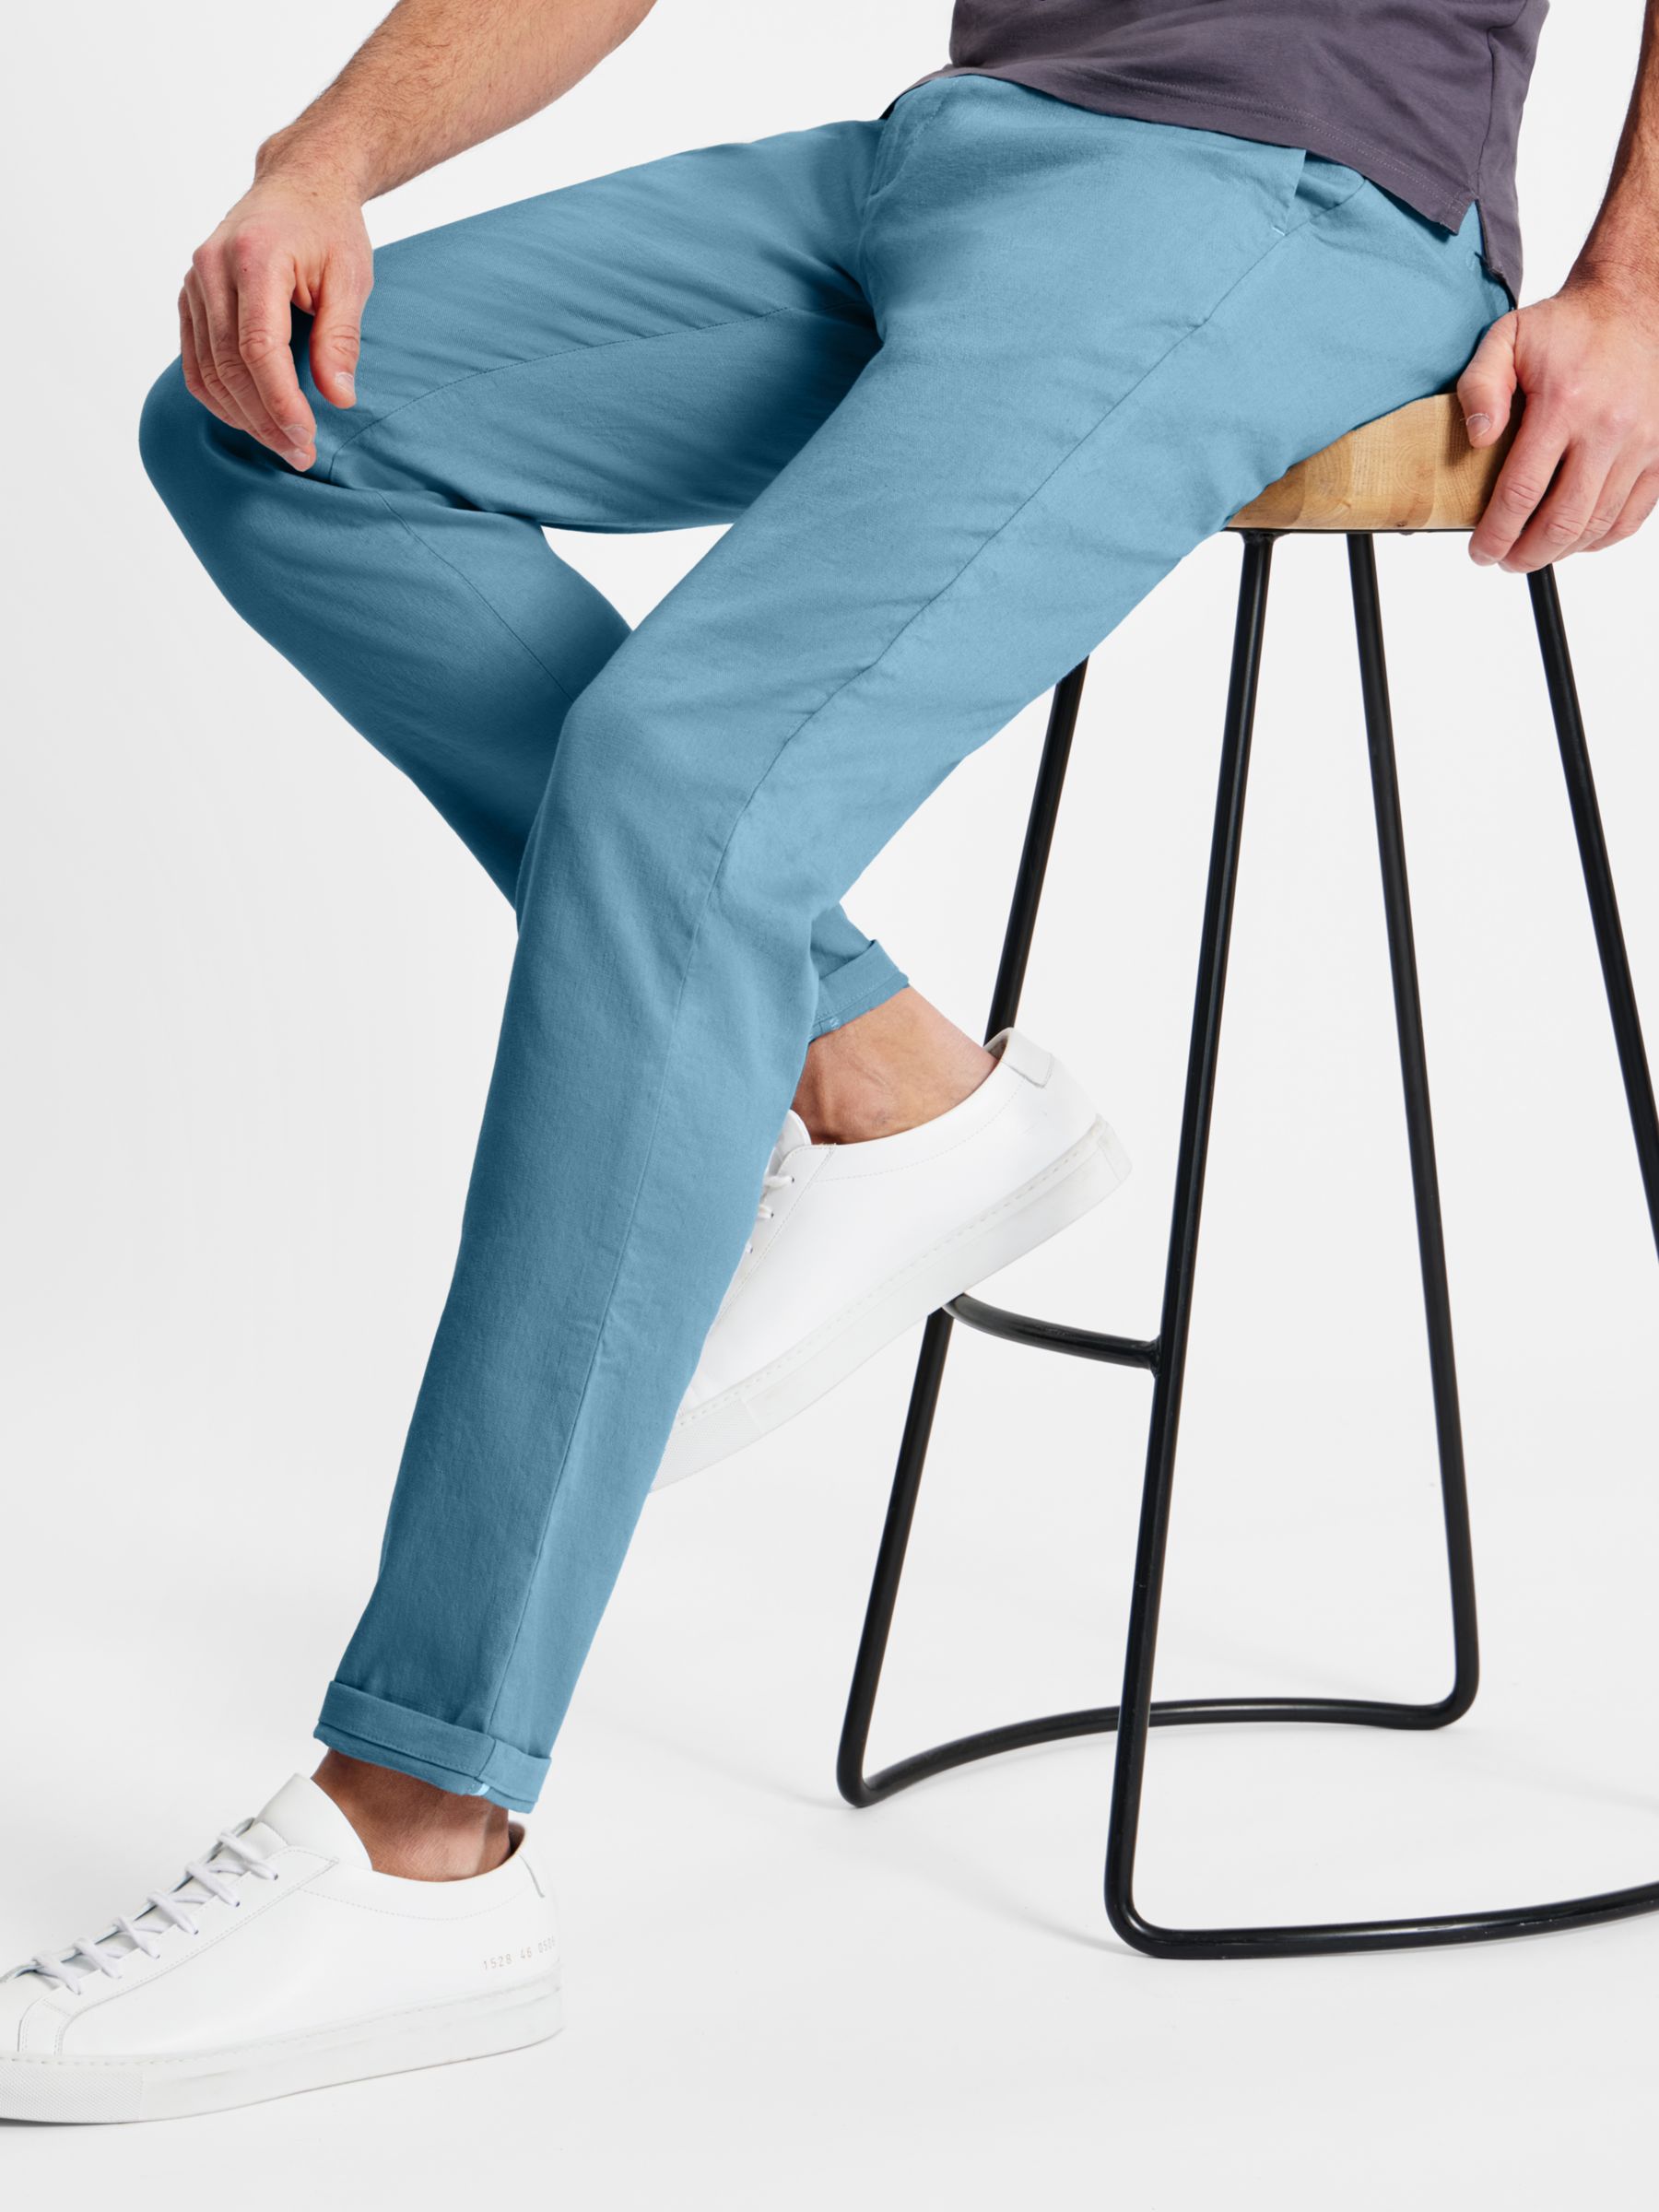 SPOKE Linen Sharps Broad Thigh Trousers, Aegean, W32/L33